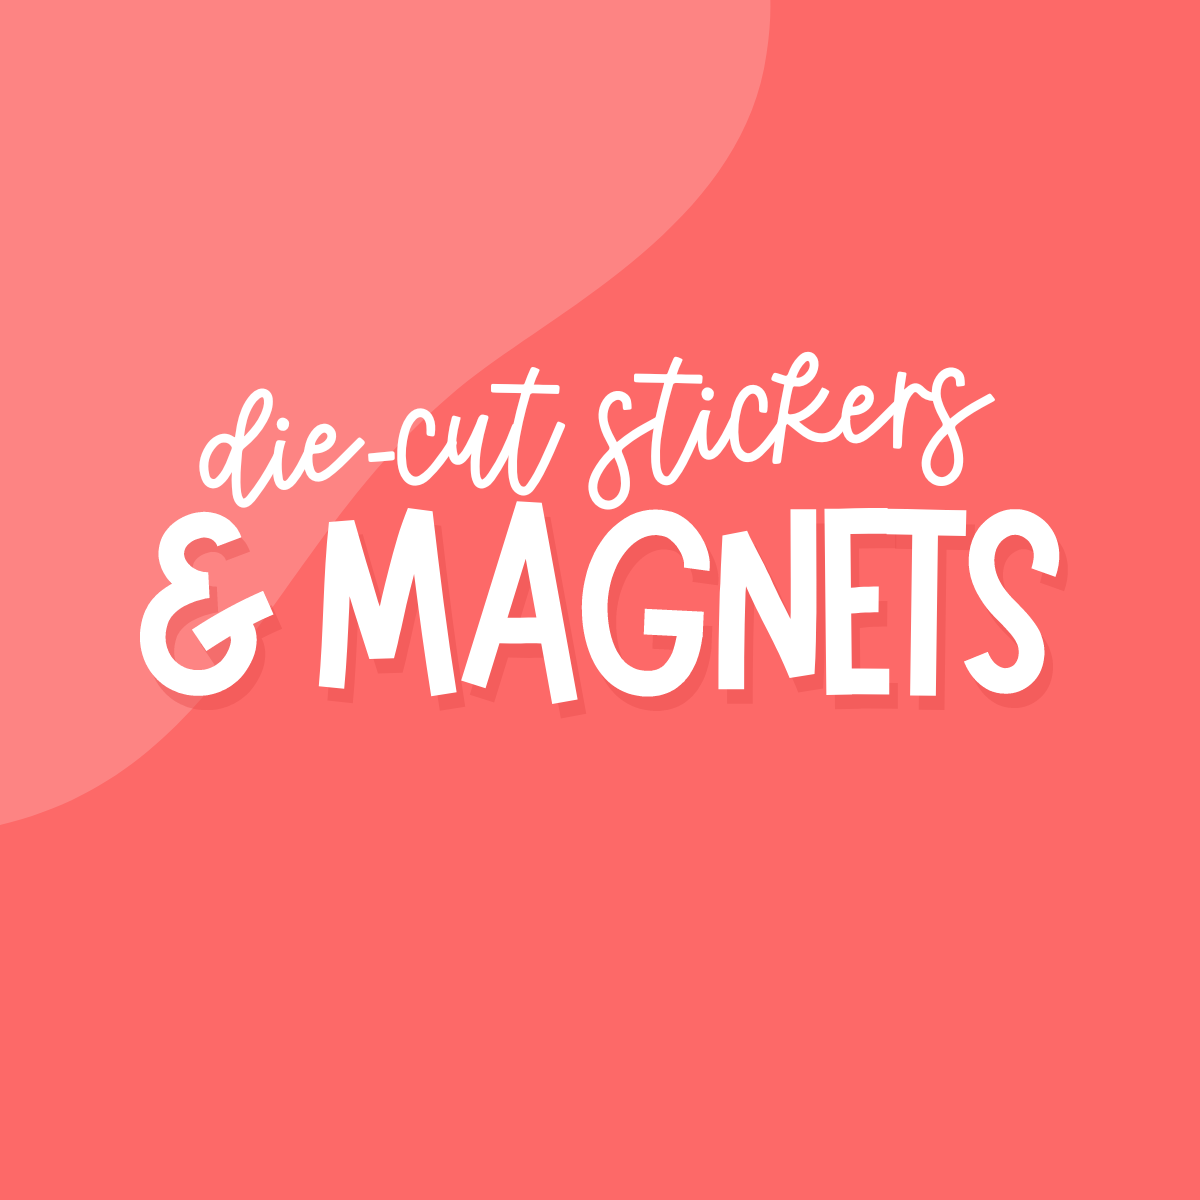 Die-Cut Stickers & Magnets